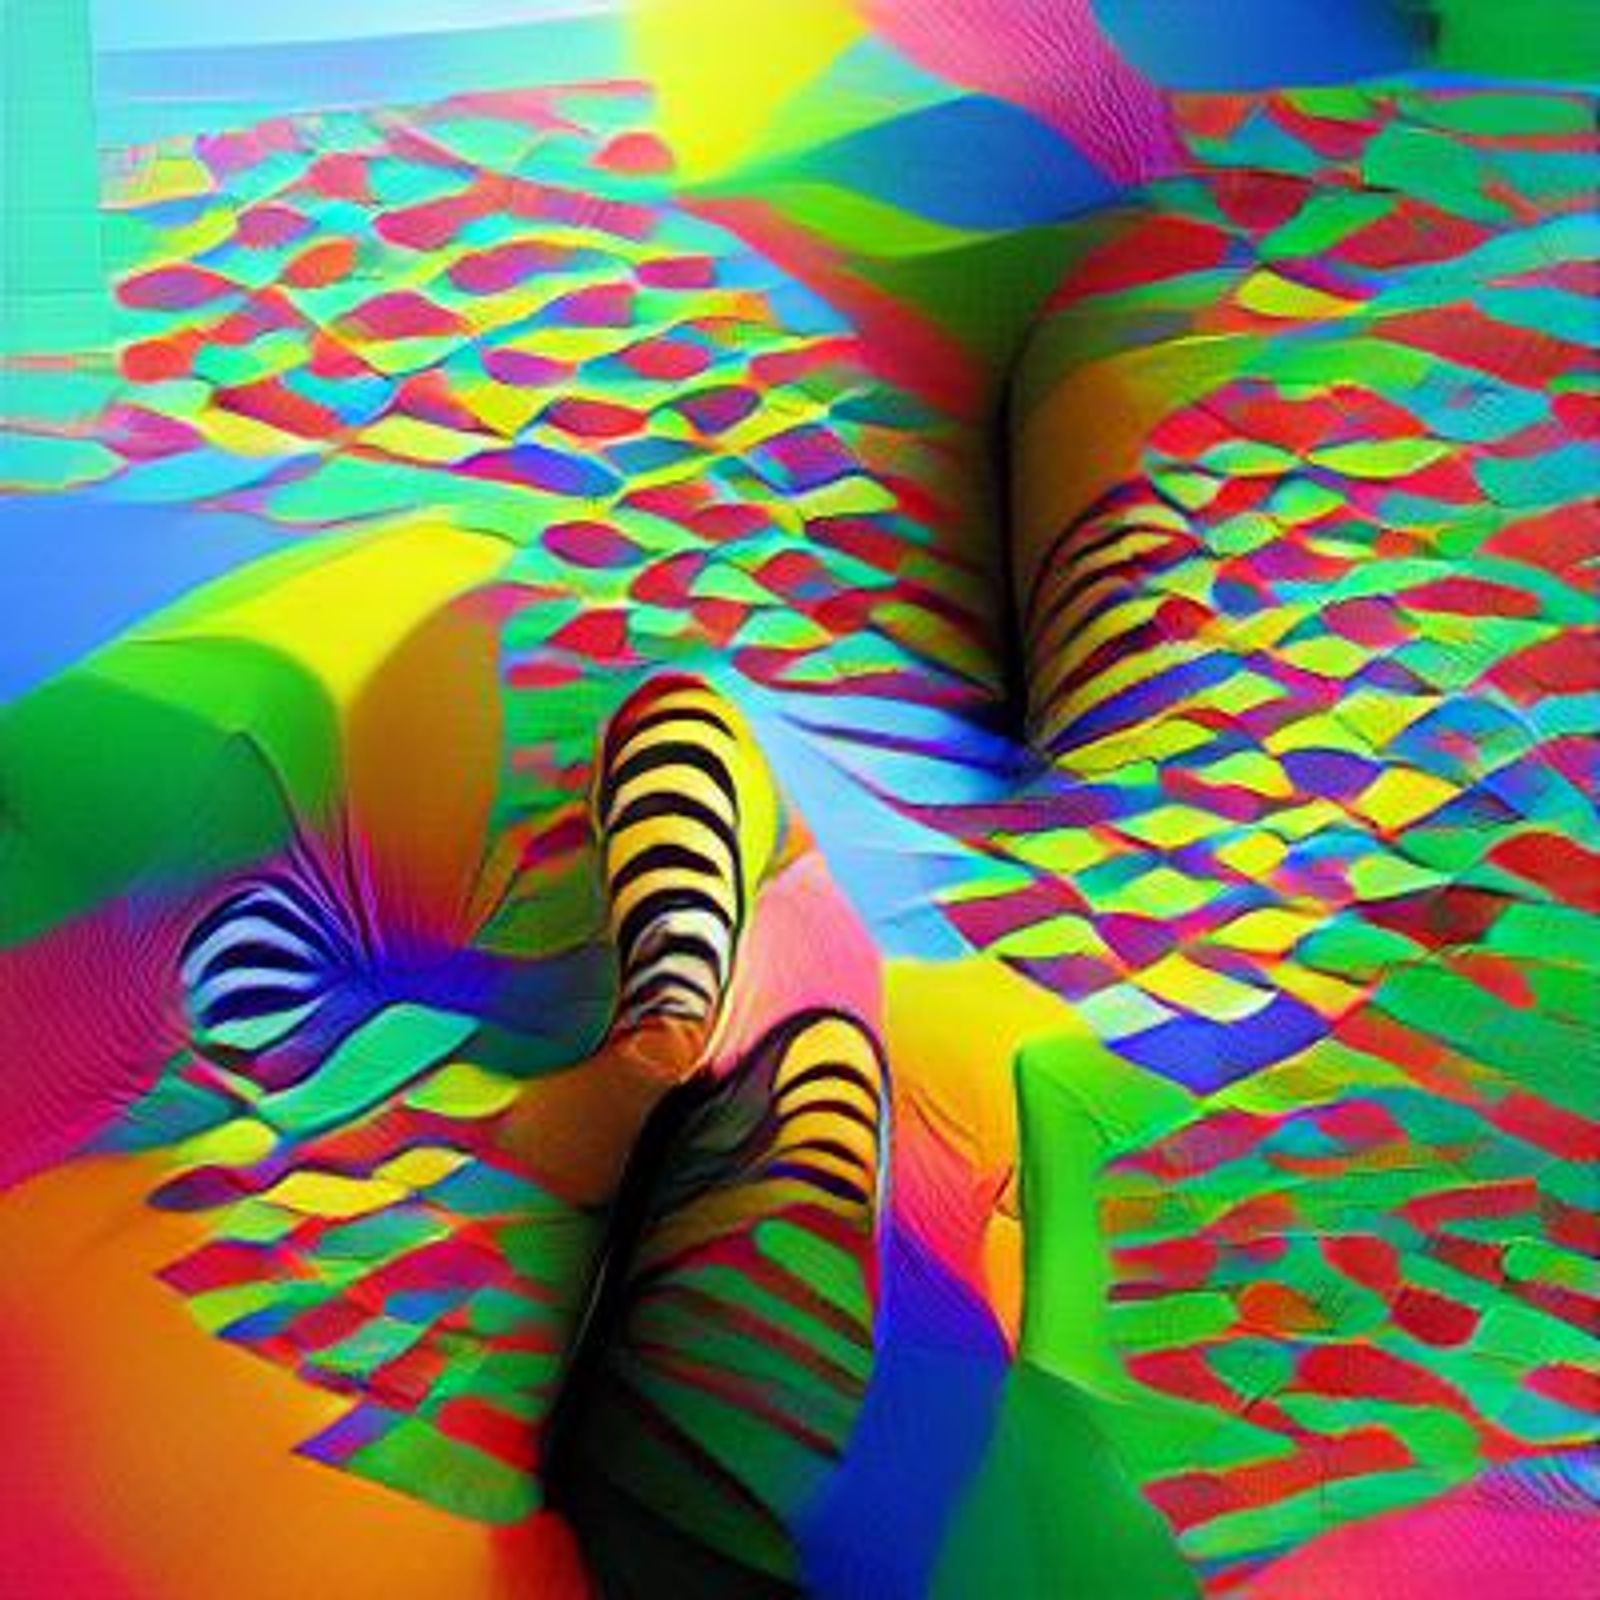 confusing illusions